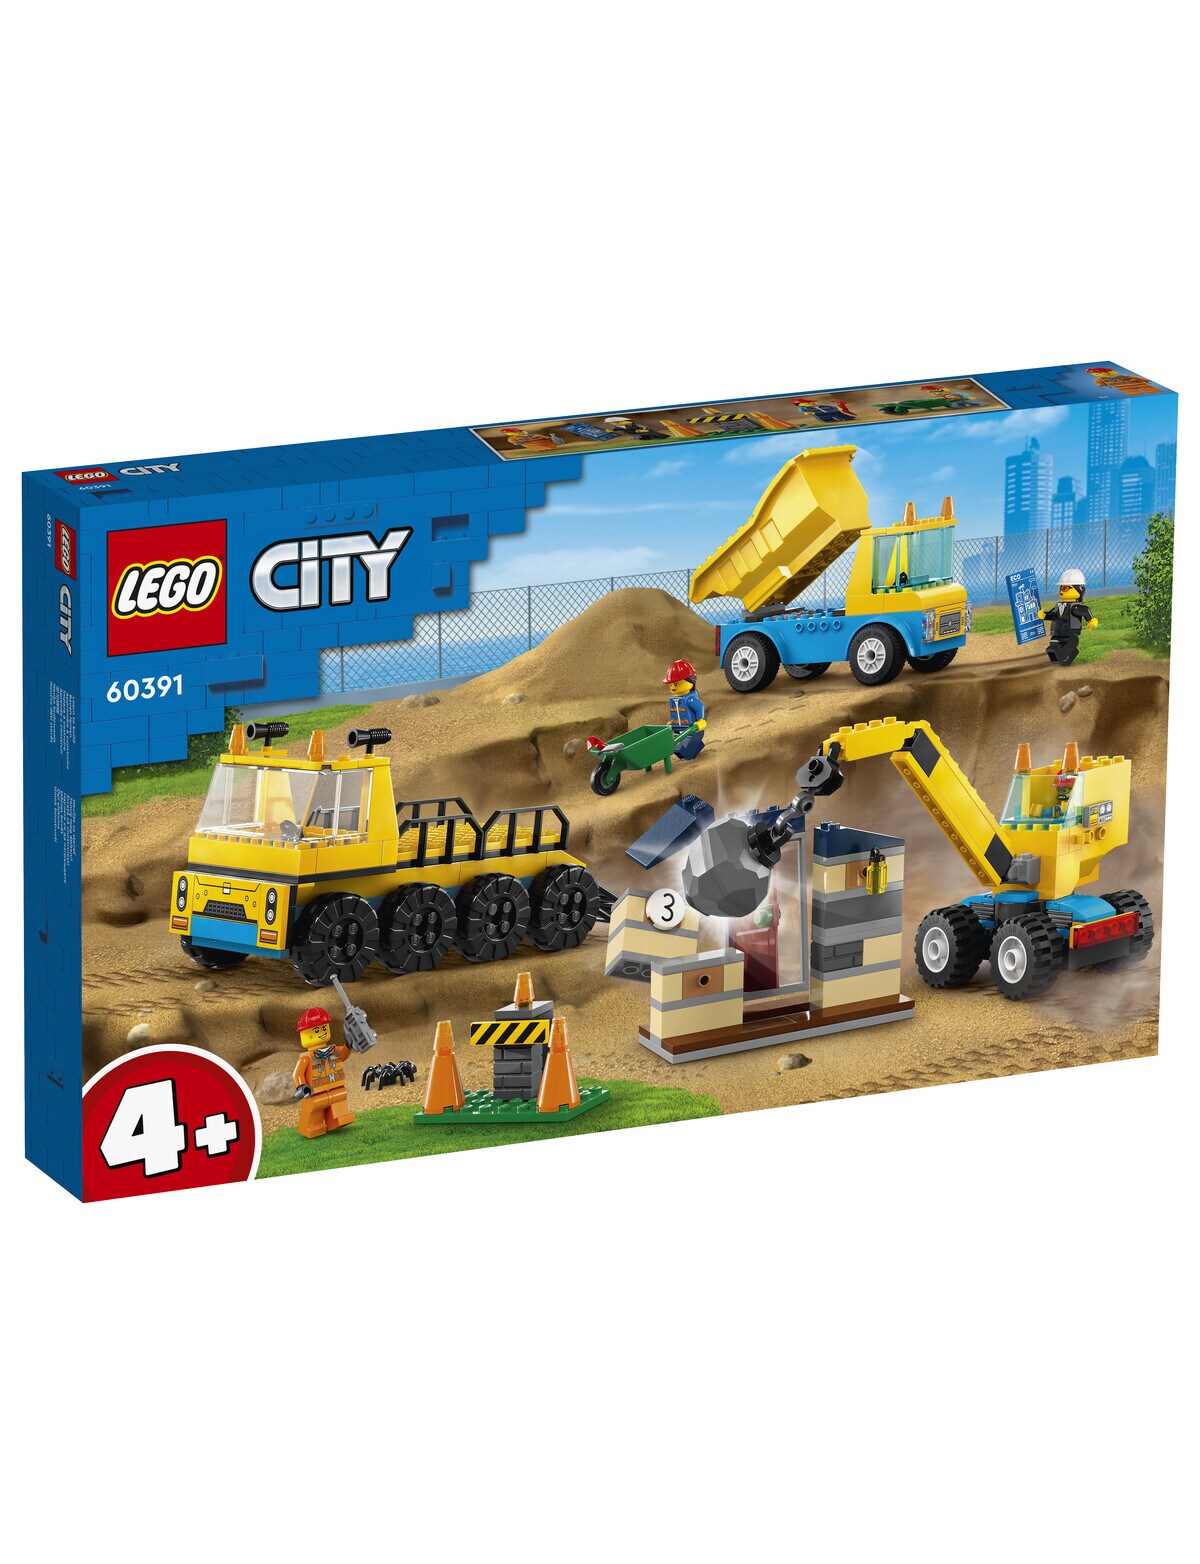 LEGO City Construction Trucks and Wrecking Ball Crane, 60391